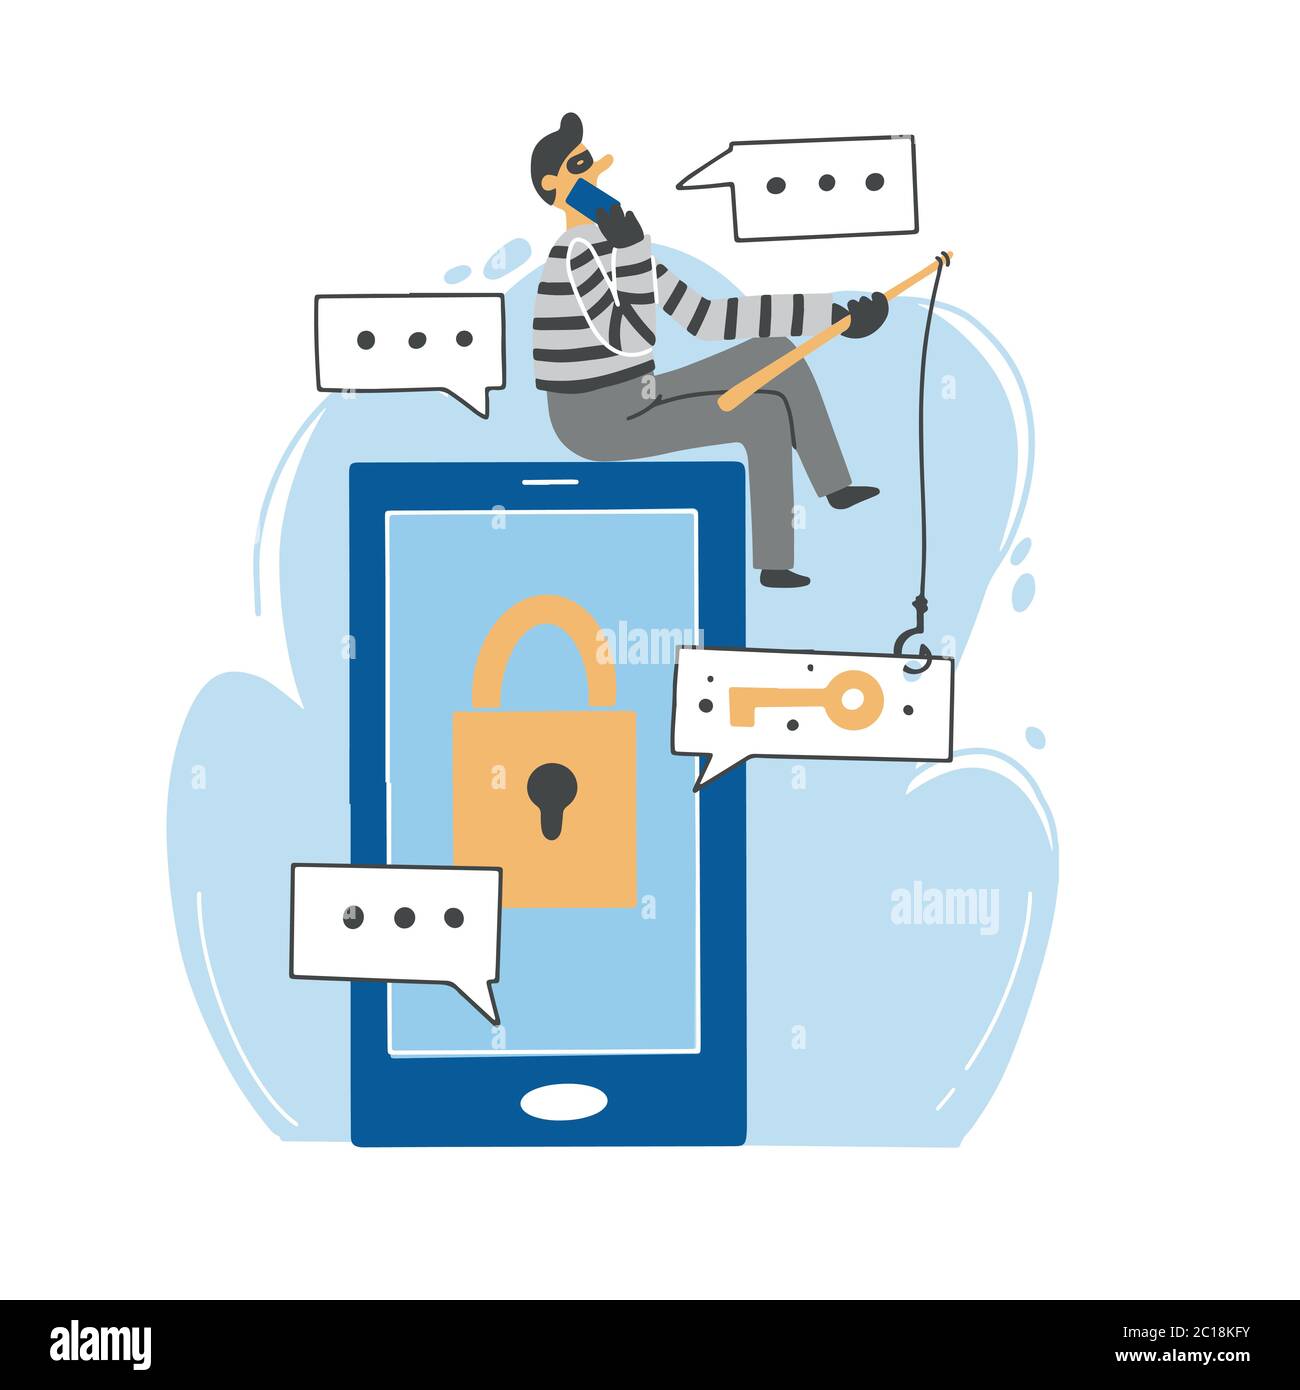 email security cartoon